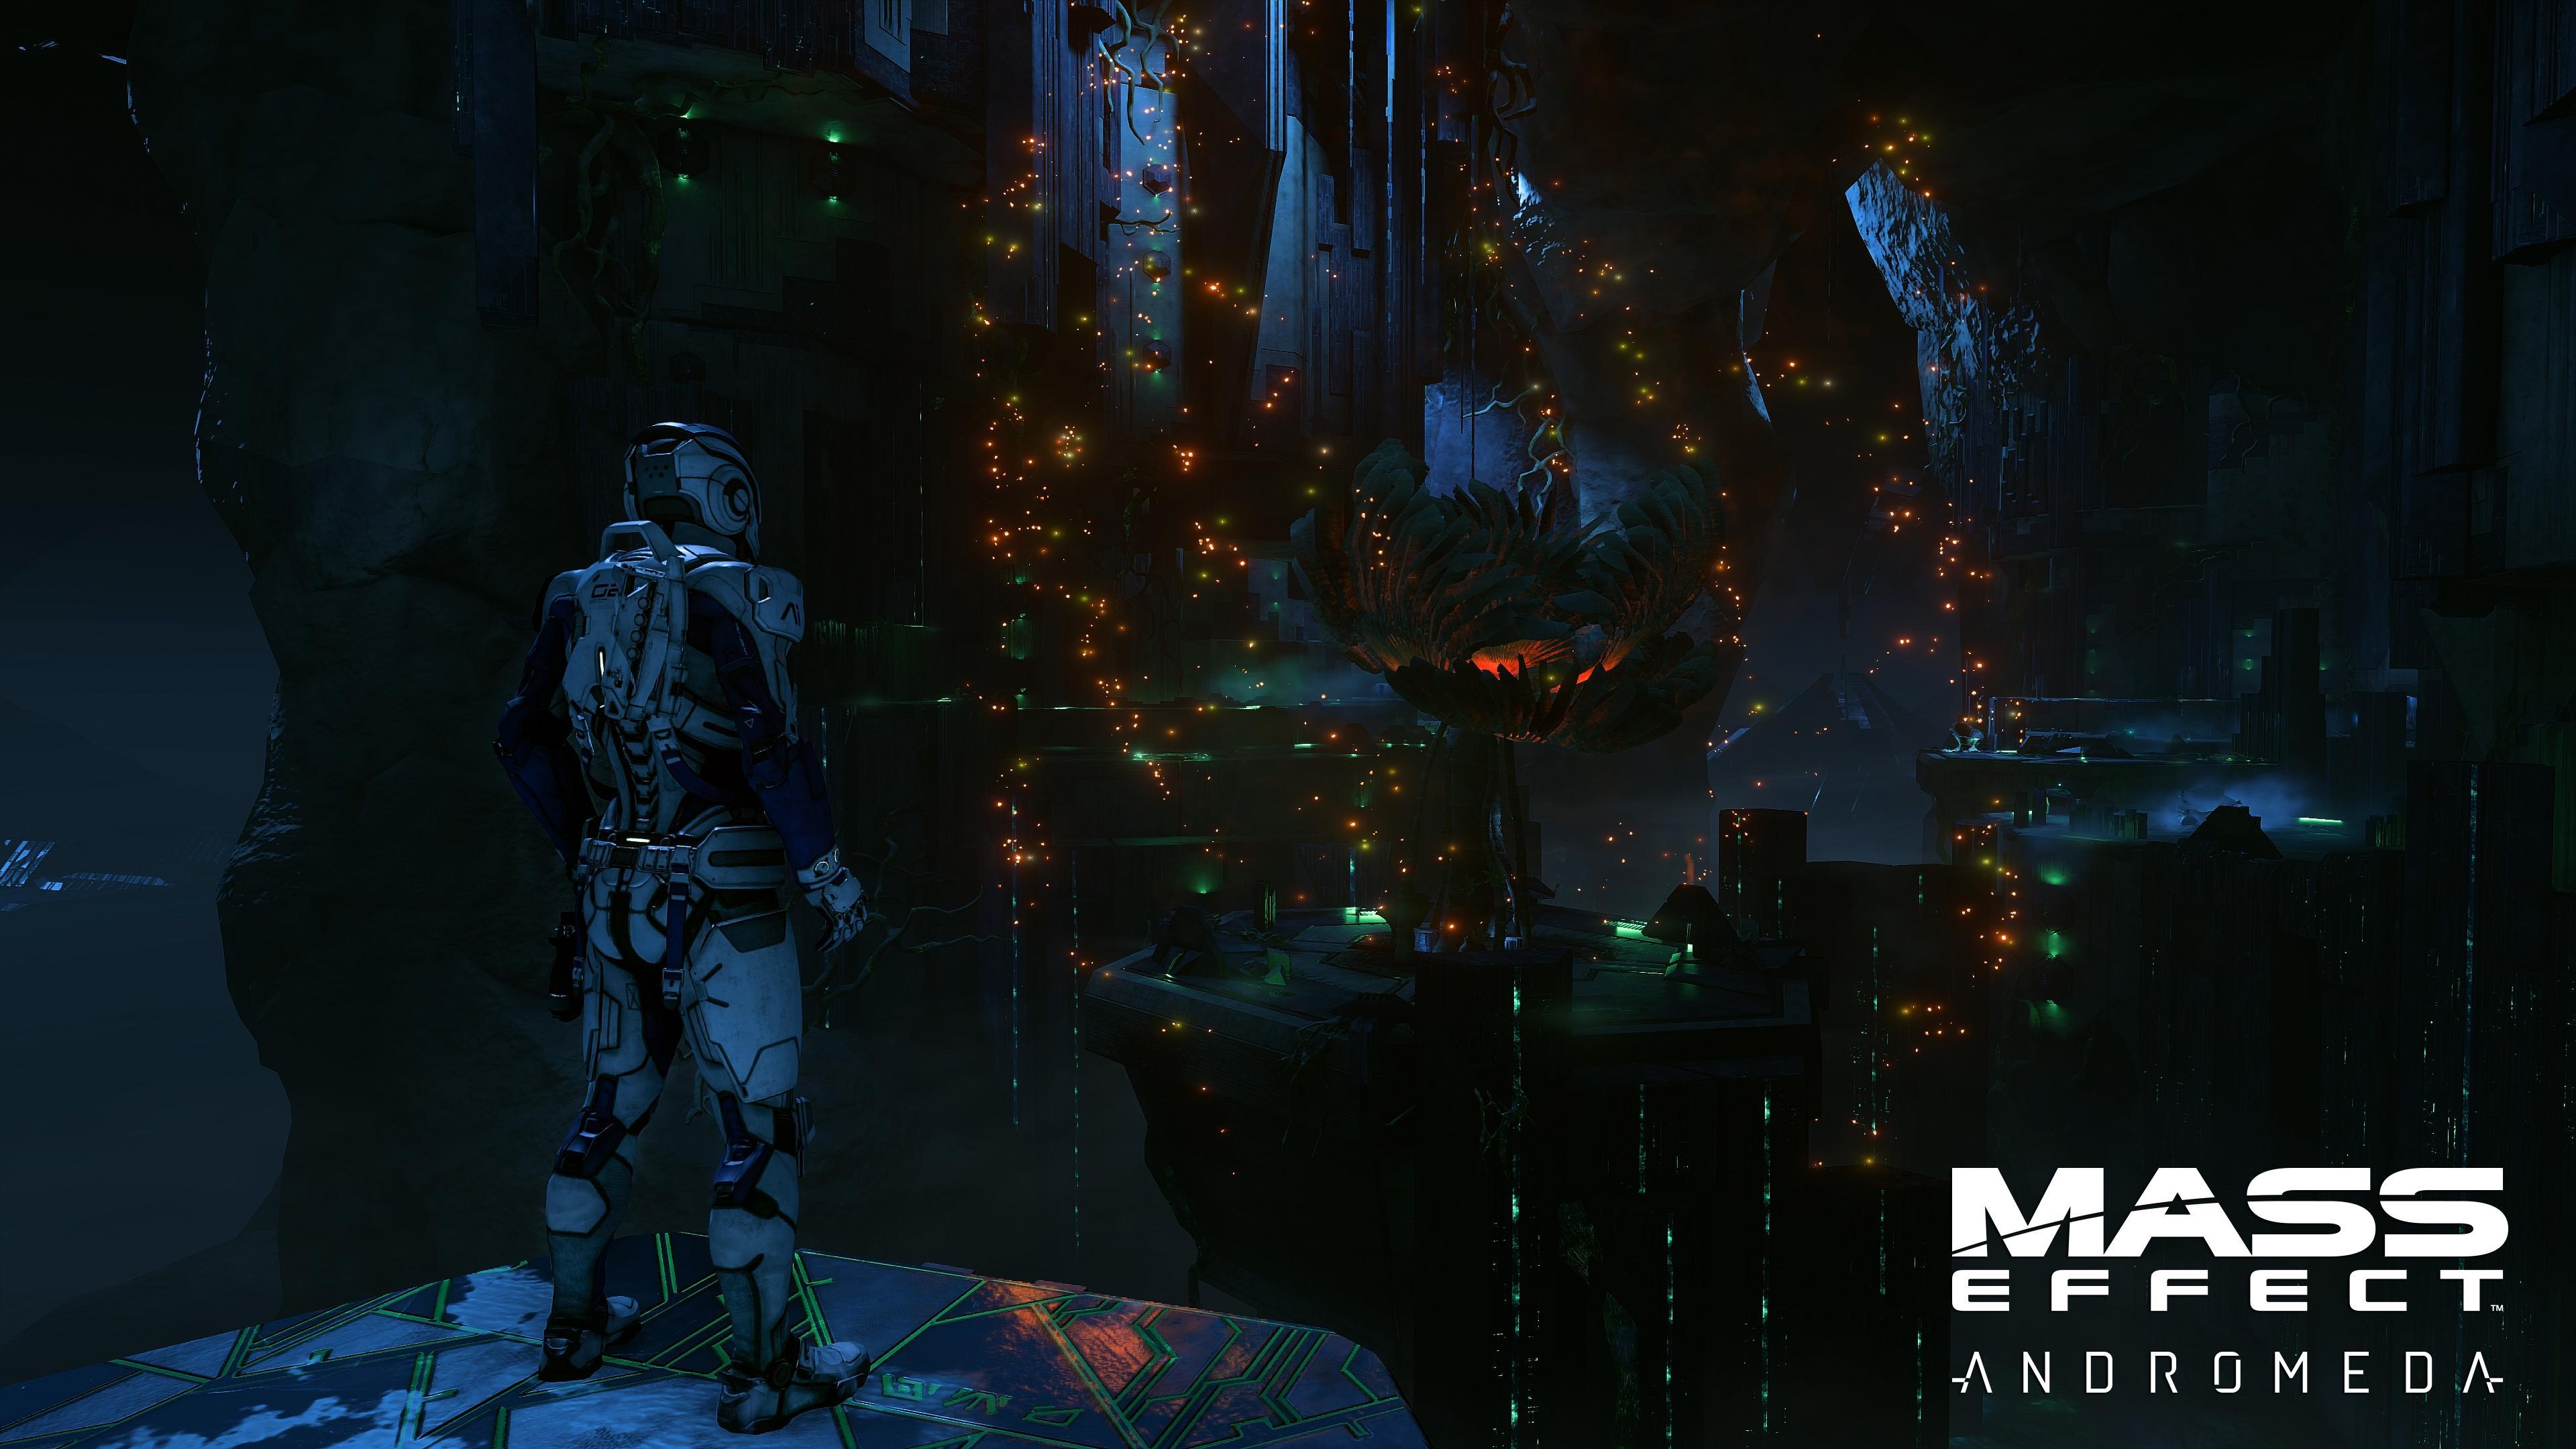 Mass Effect: Andromeda 4k Ultra HD Wallpaper. Background Image